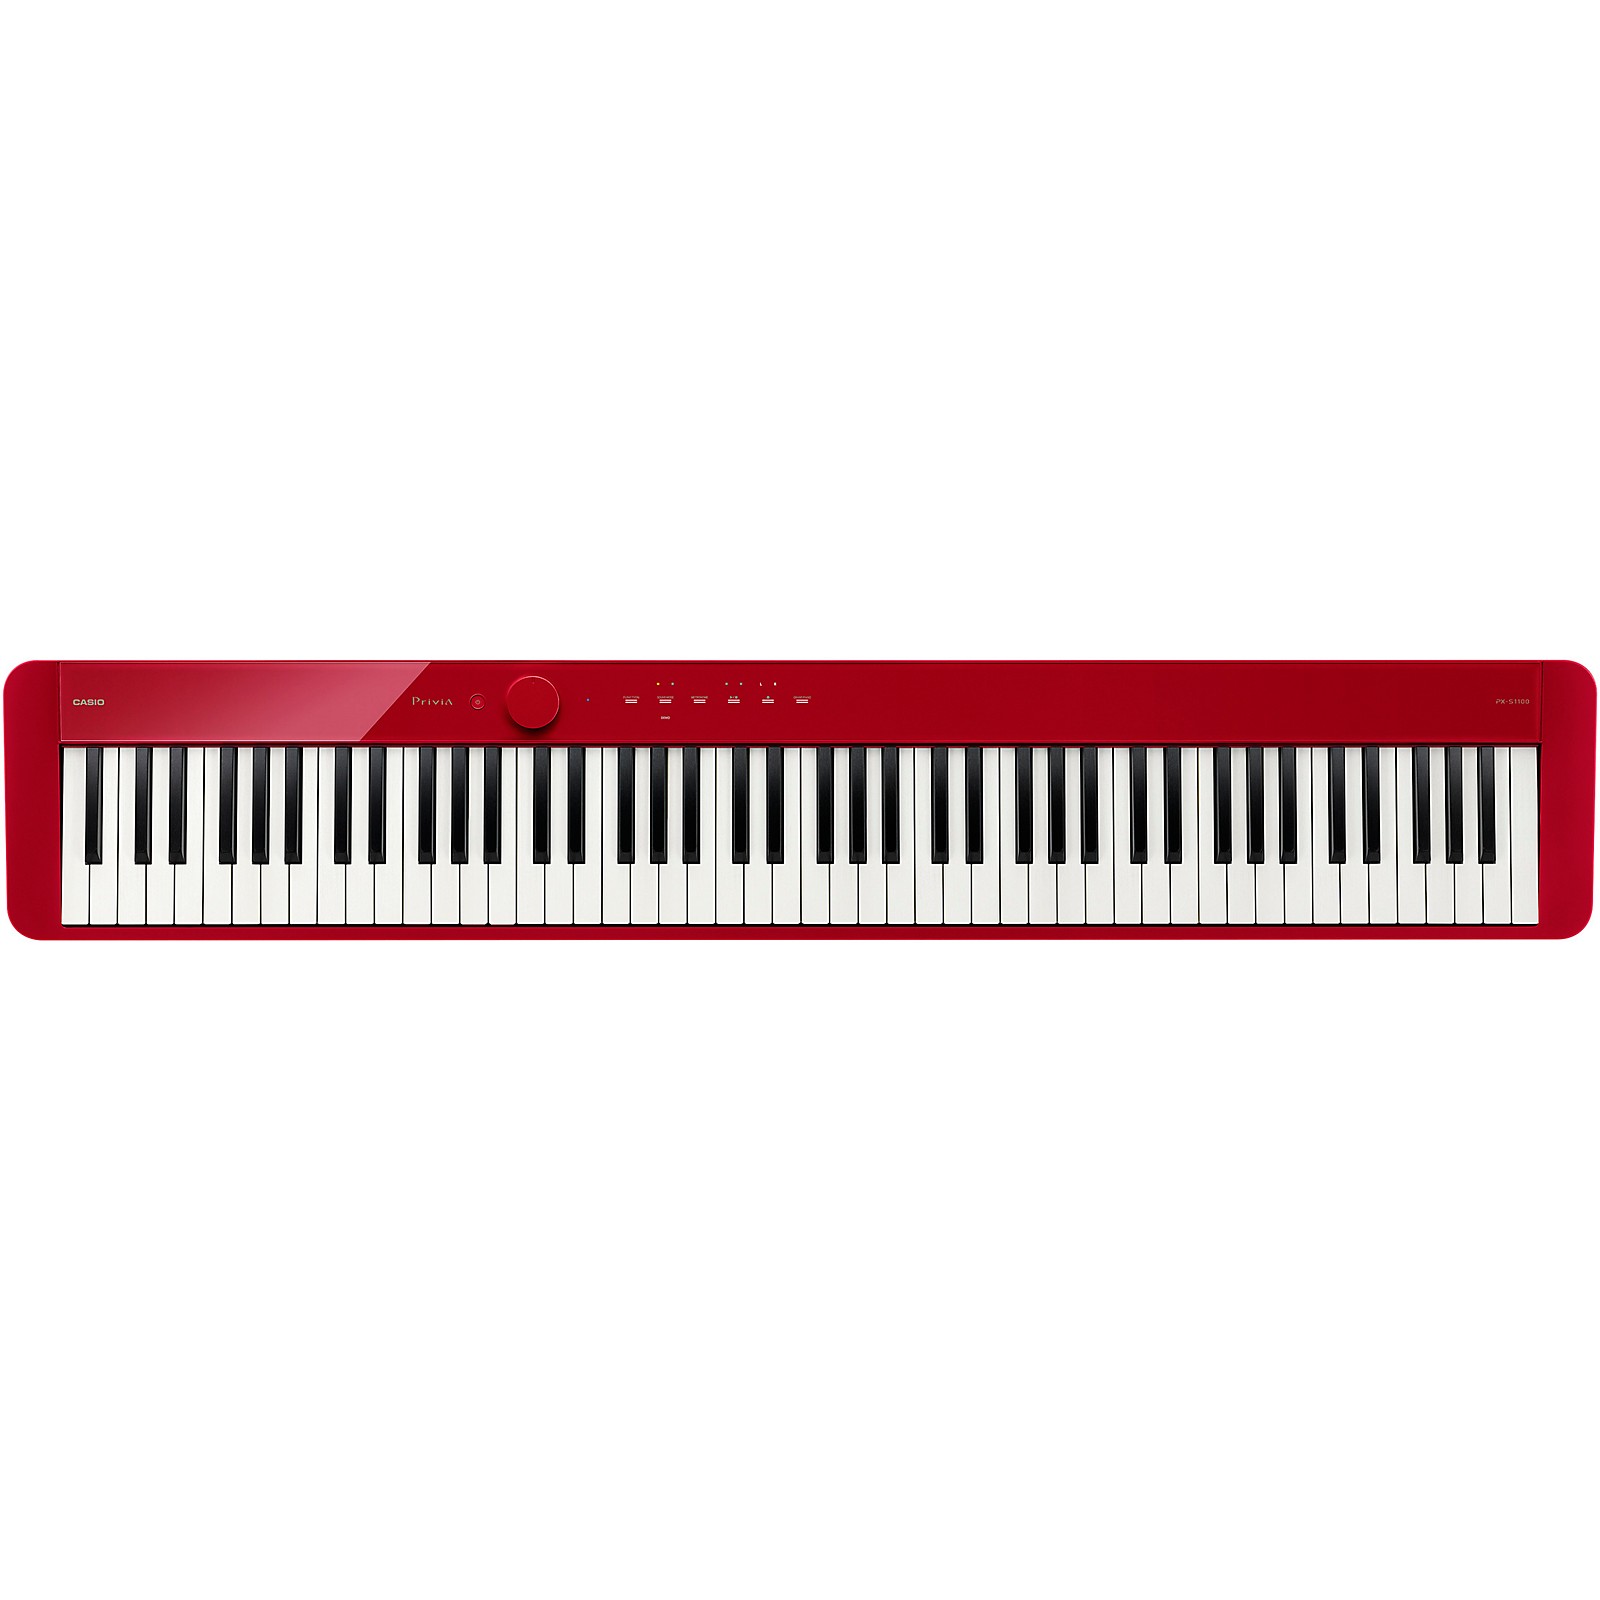 Casio PX-S1100 Privia Digital Piano Red | Guitar Center